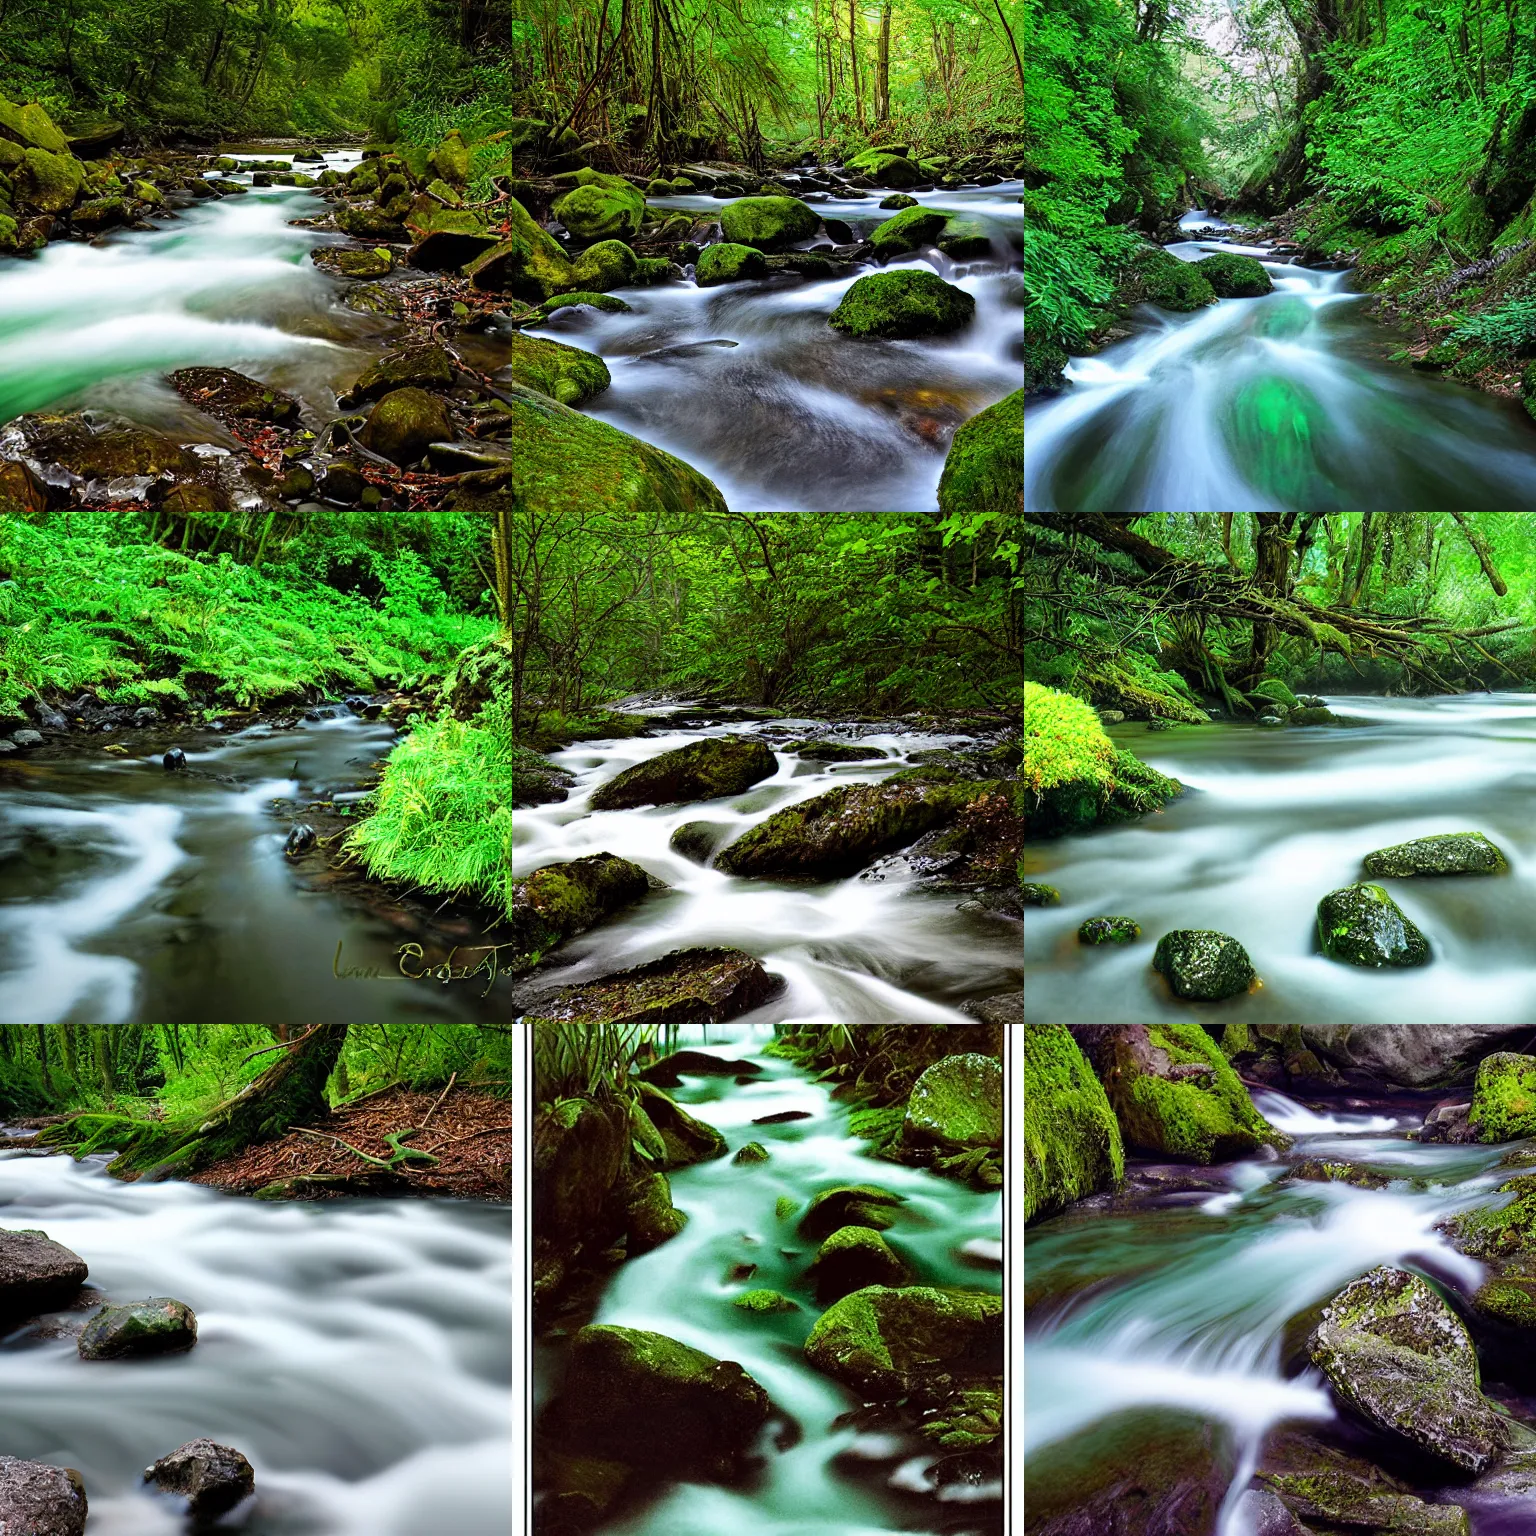 Prompt: emerald stream